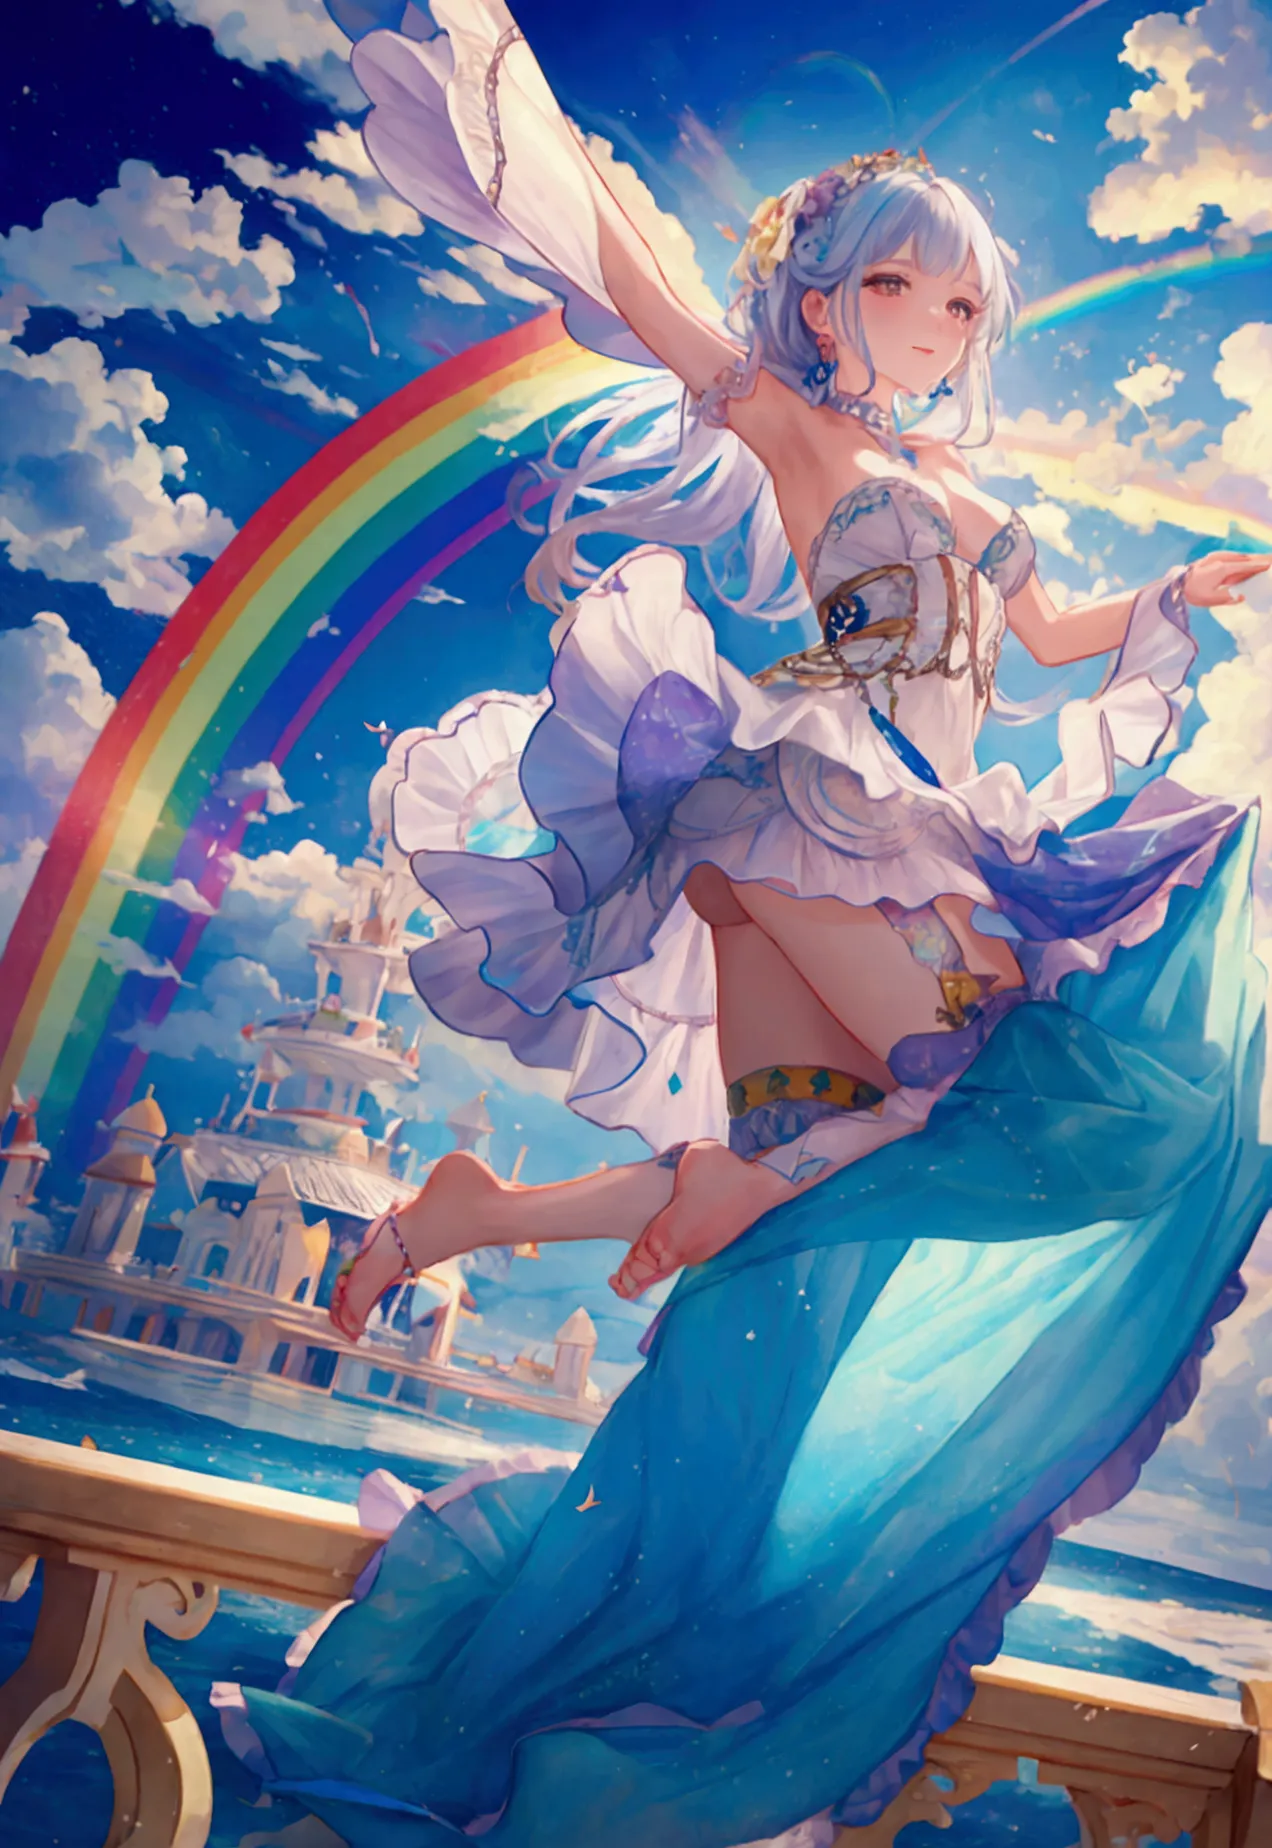 Woman jumping into the rainbow sky